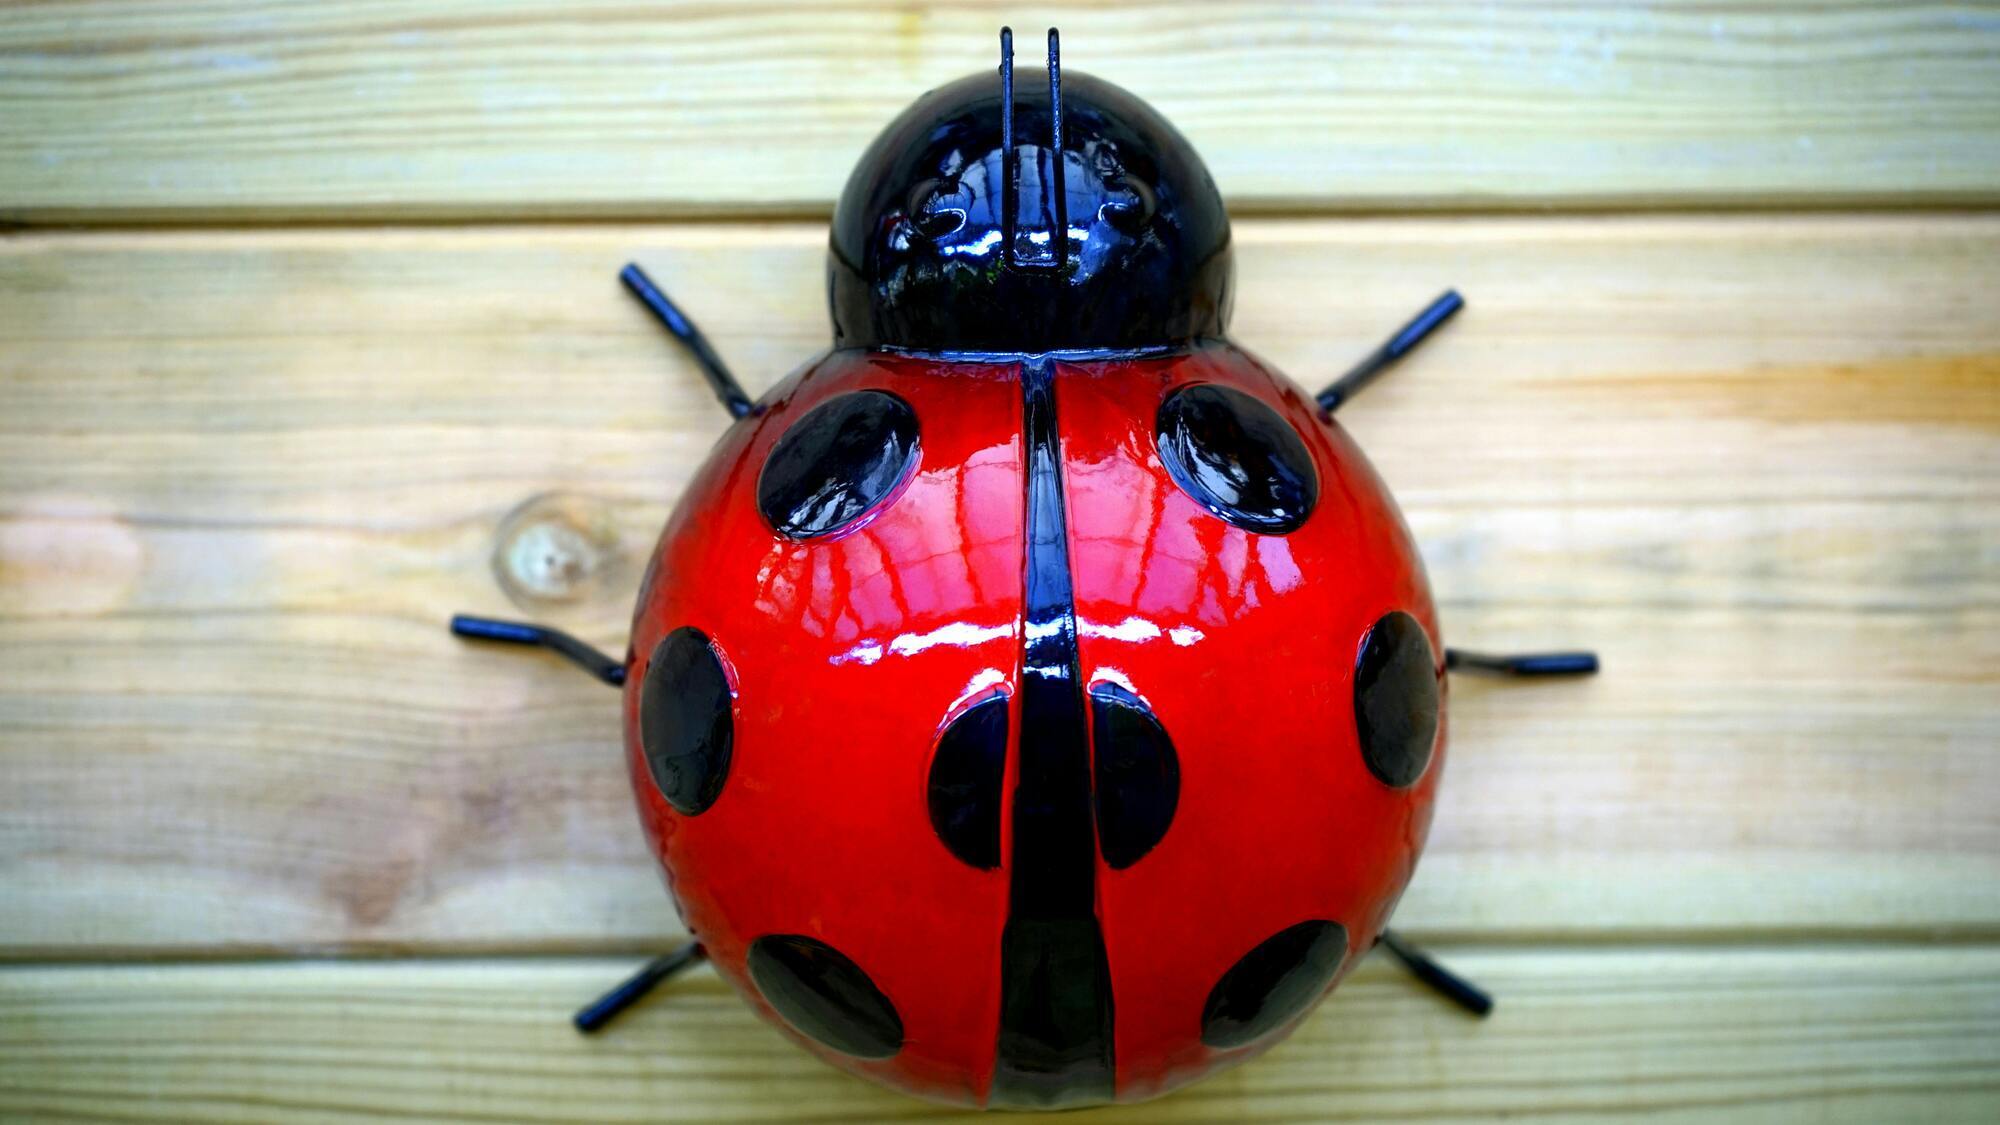 The symbol of the ladybug